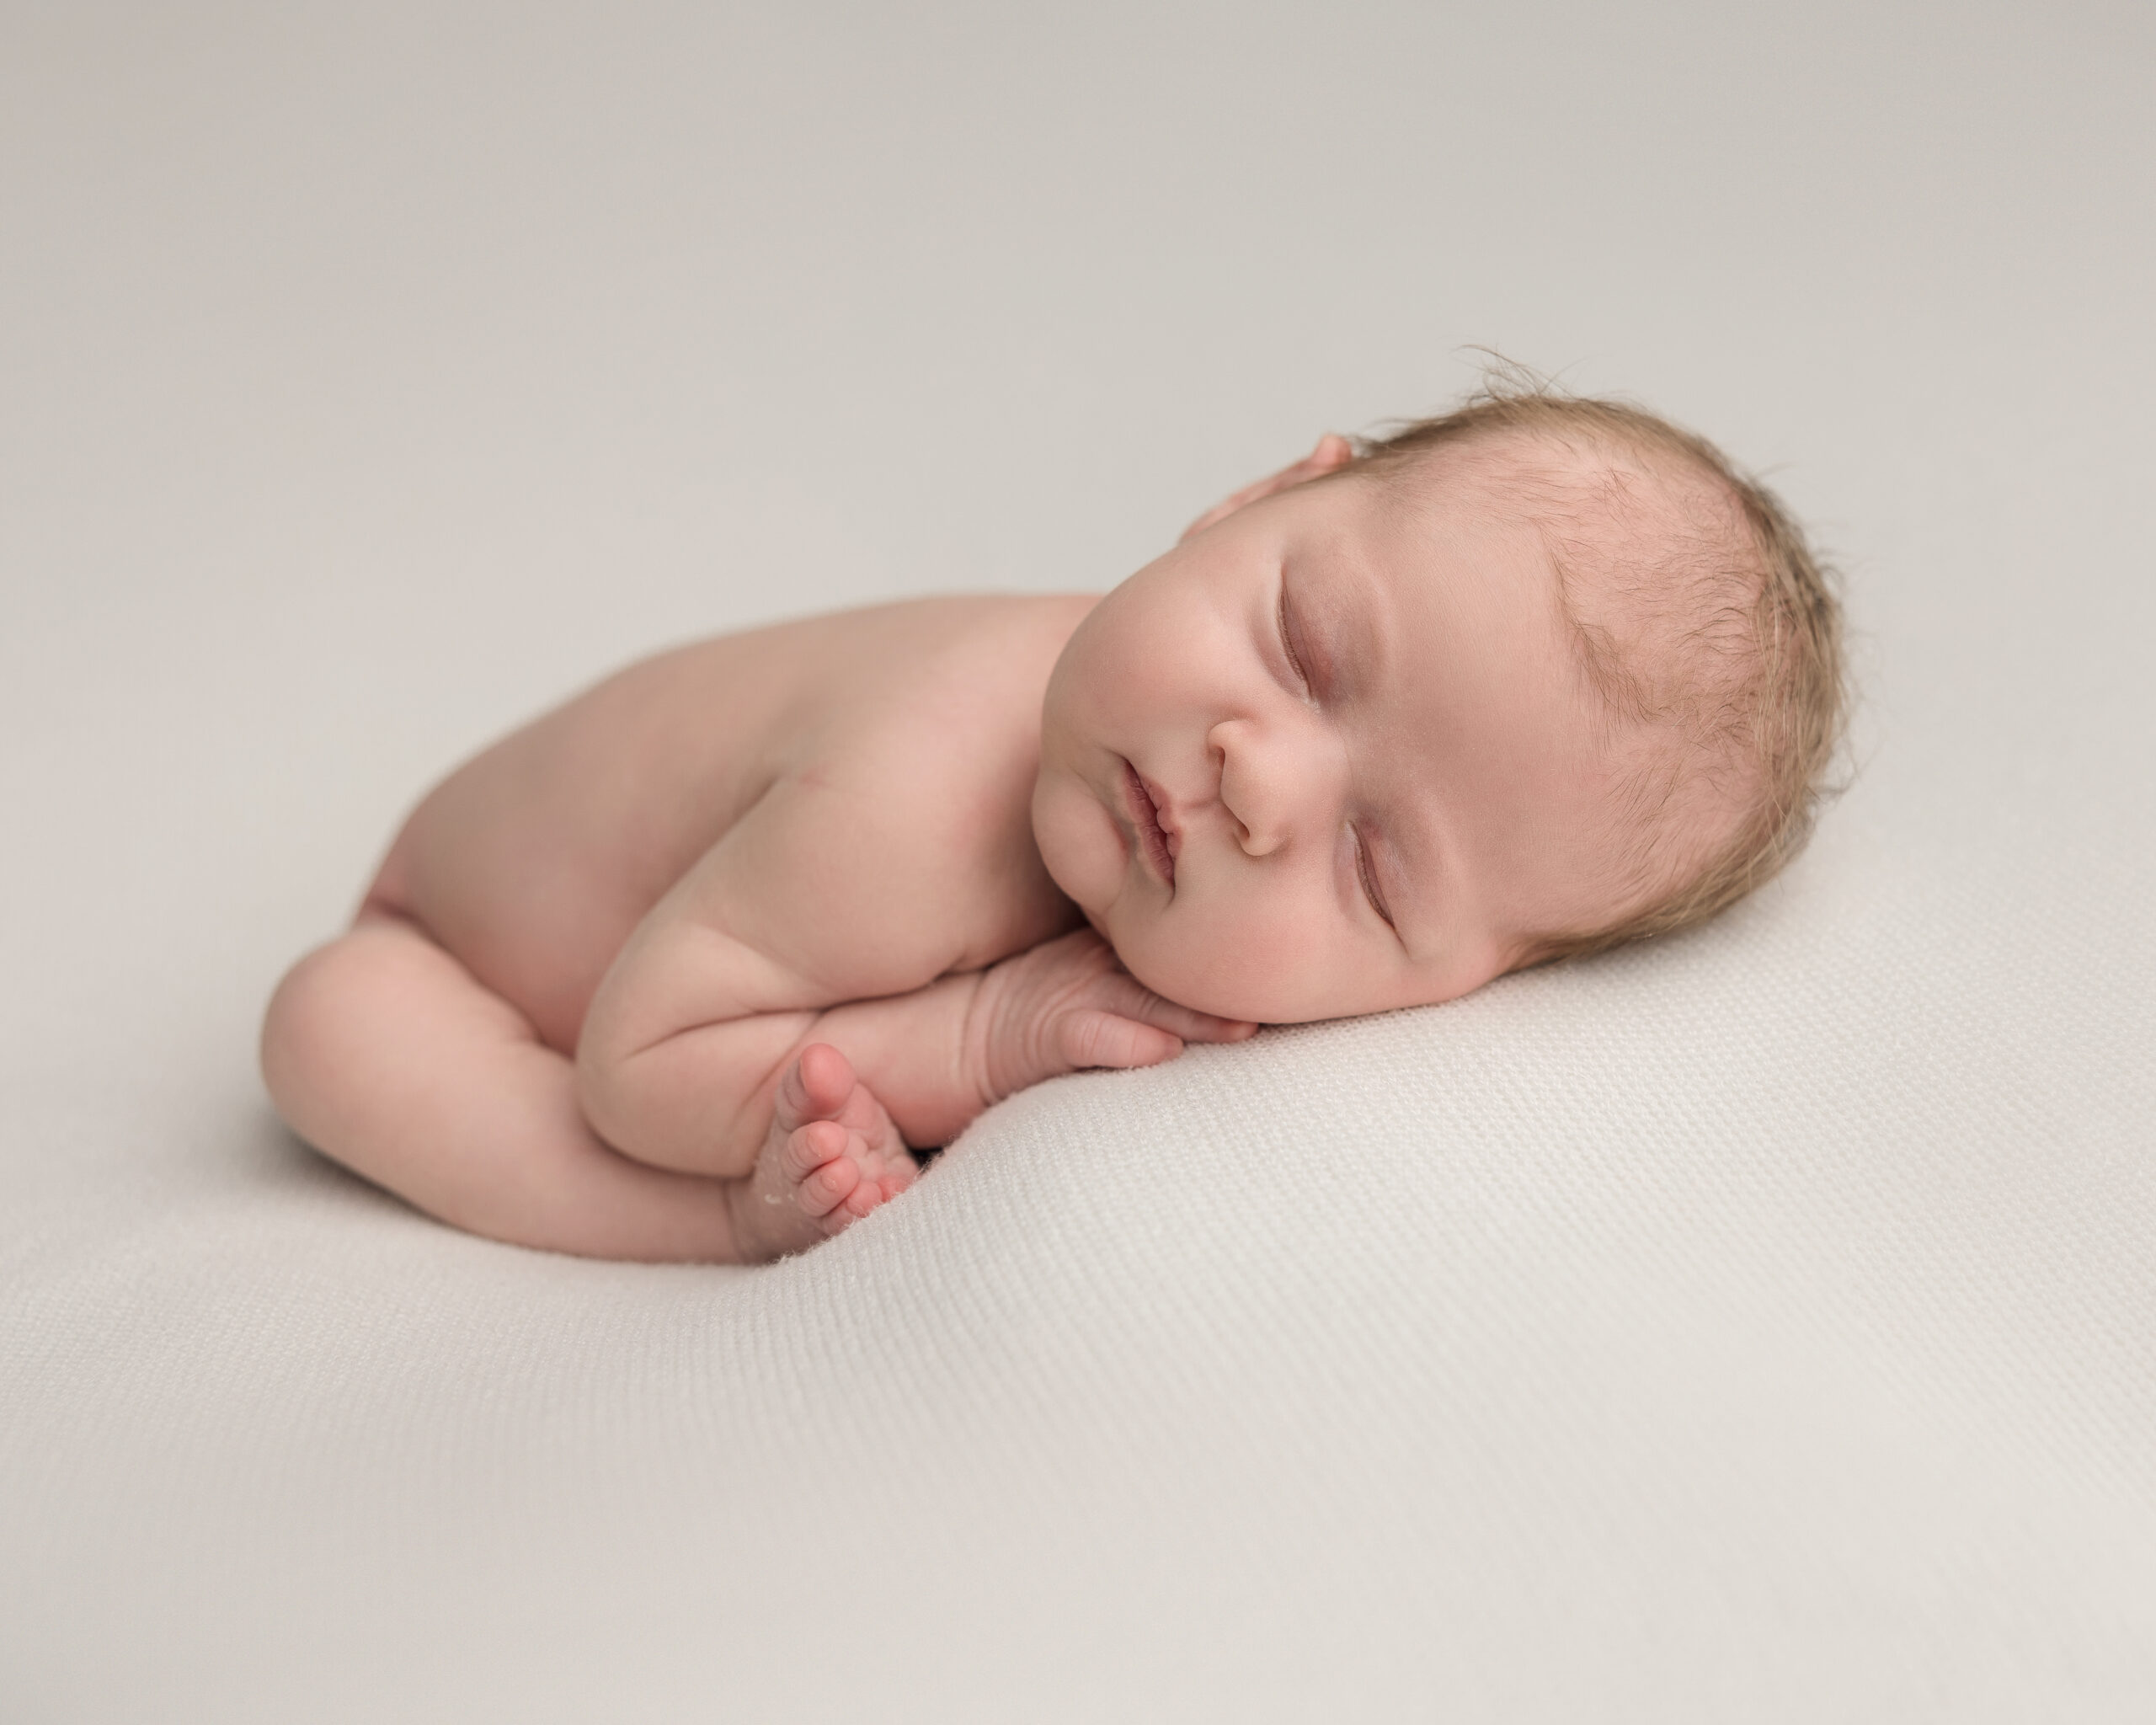 Newborn baby laying on a neutral cloth